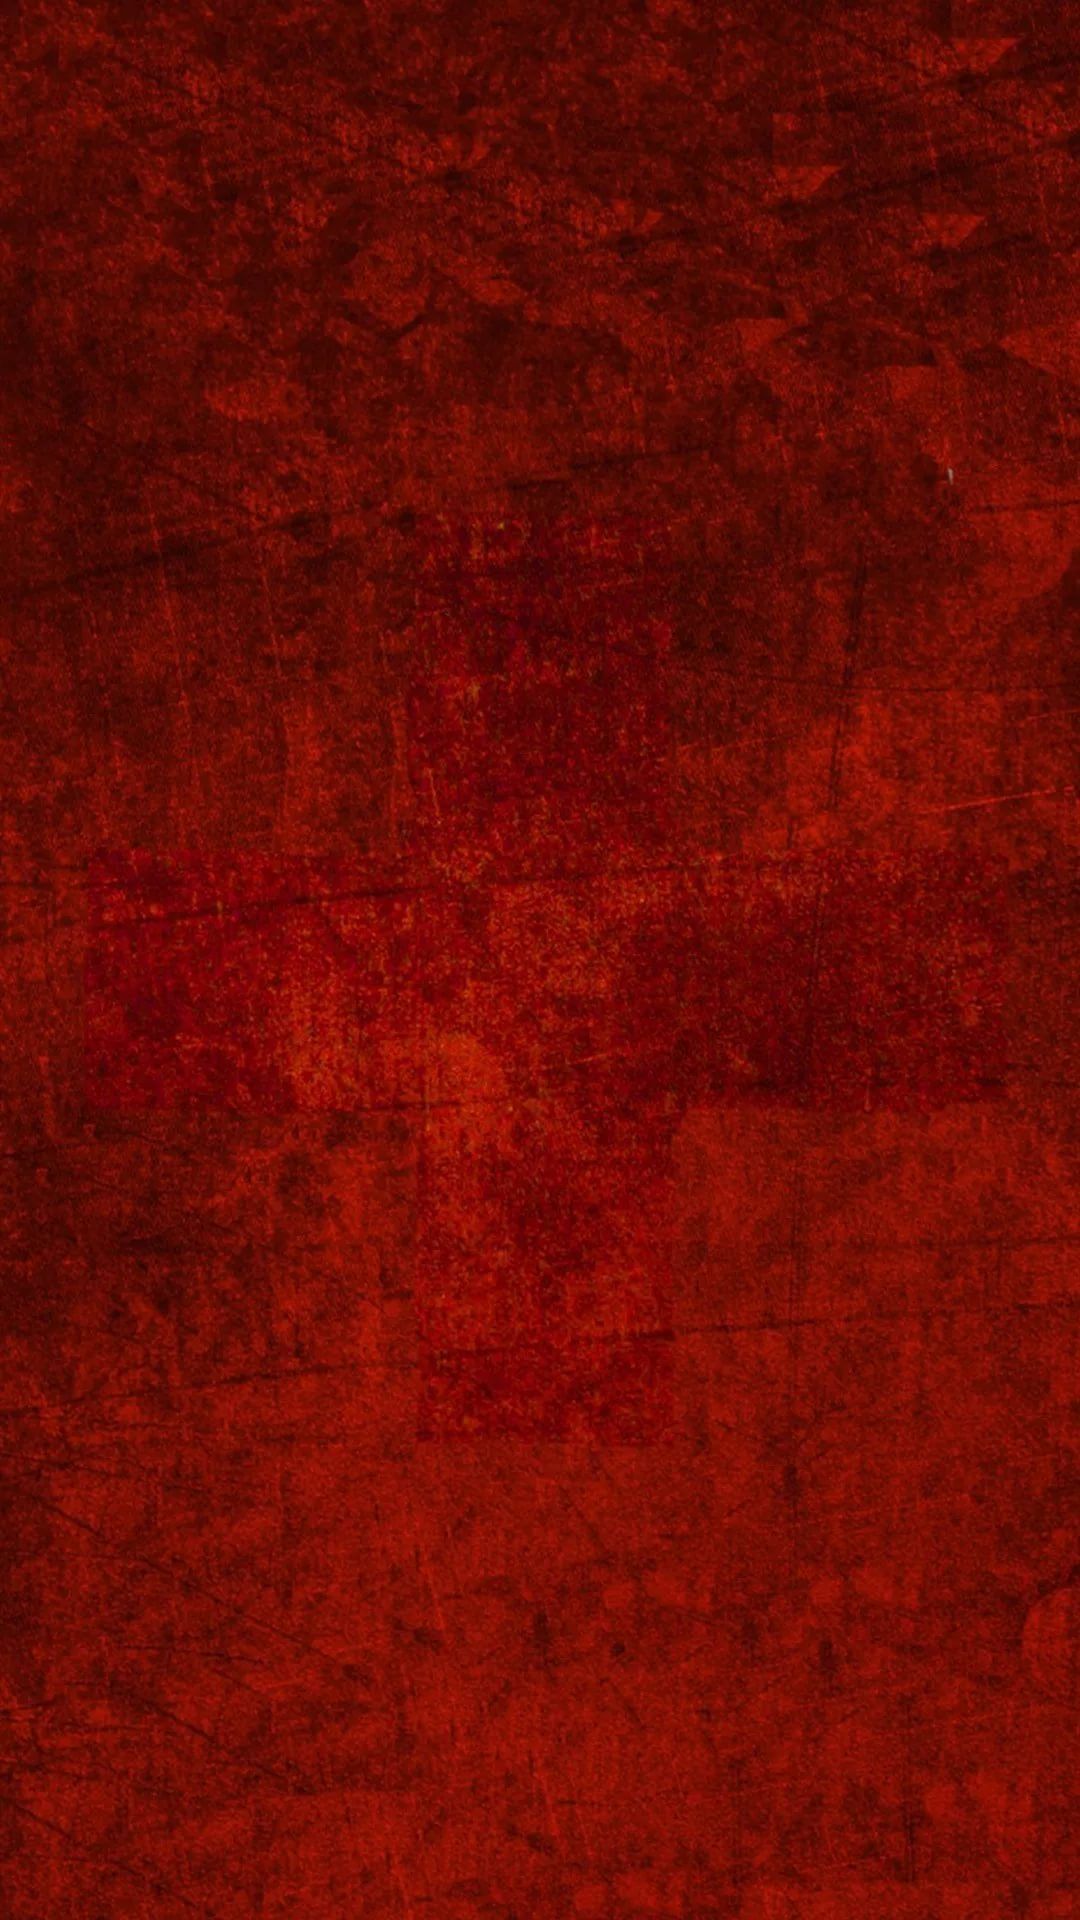 Red Hd iPhone hd wallpaper